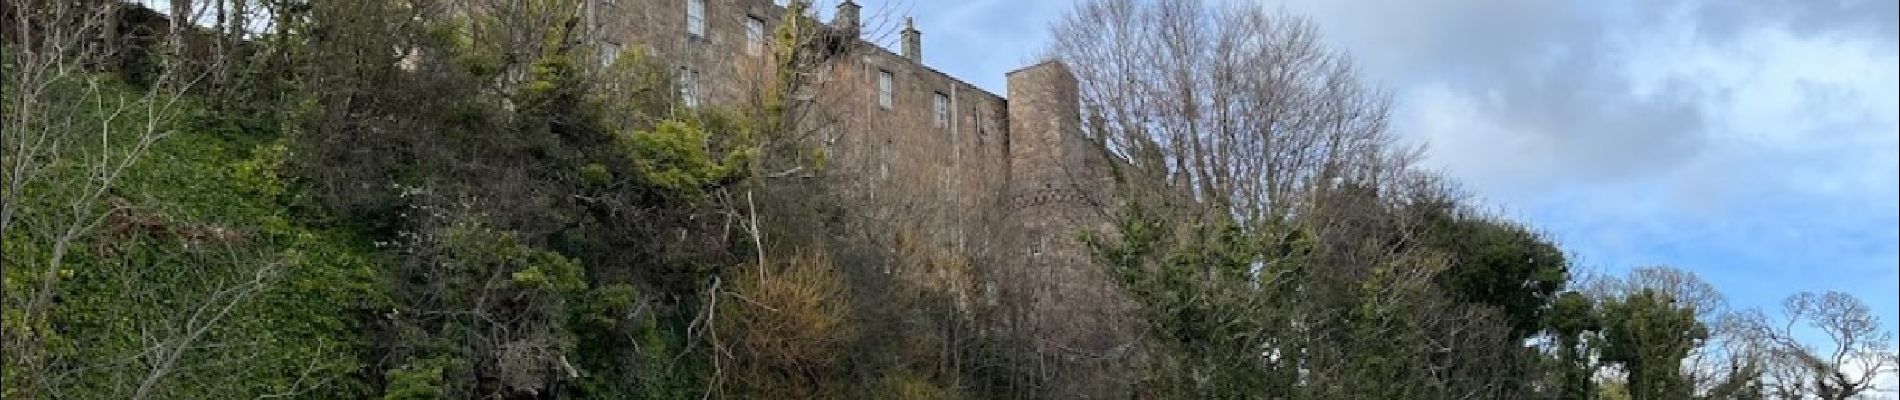 POI Unknown - Wemyss Castle - Photo